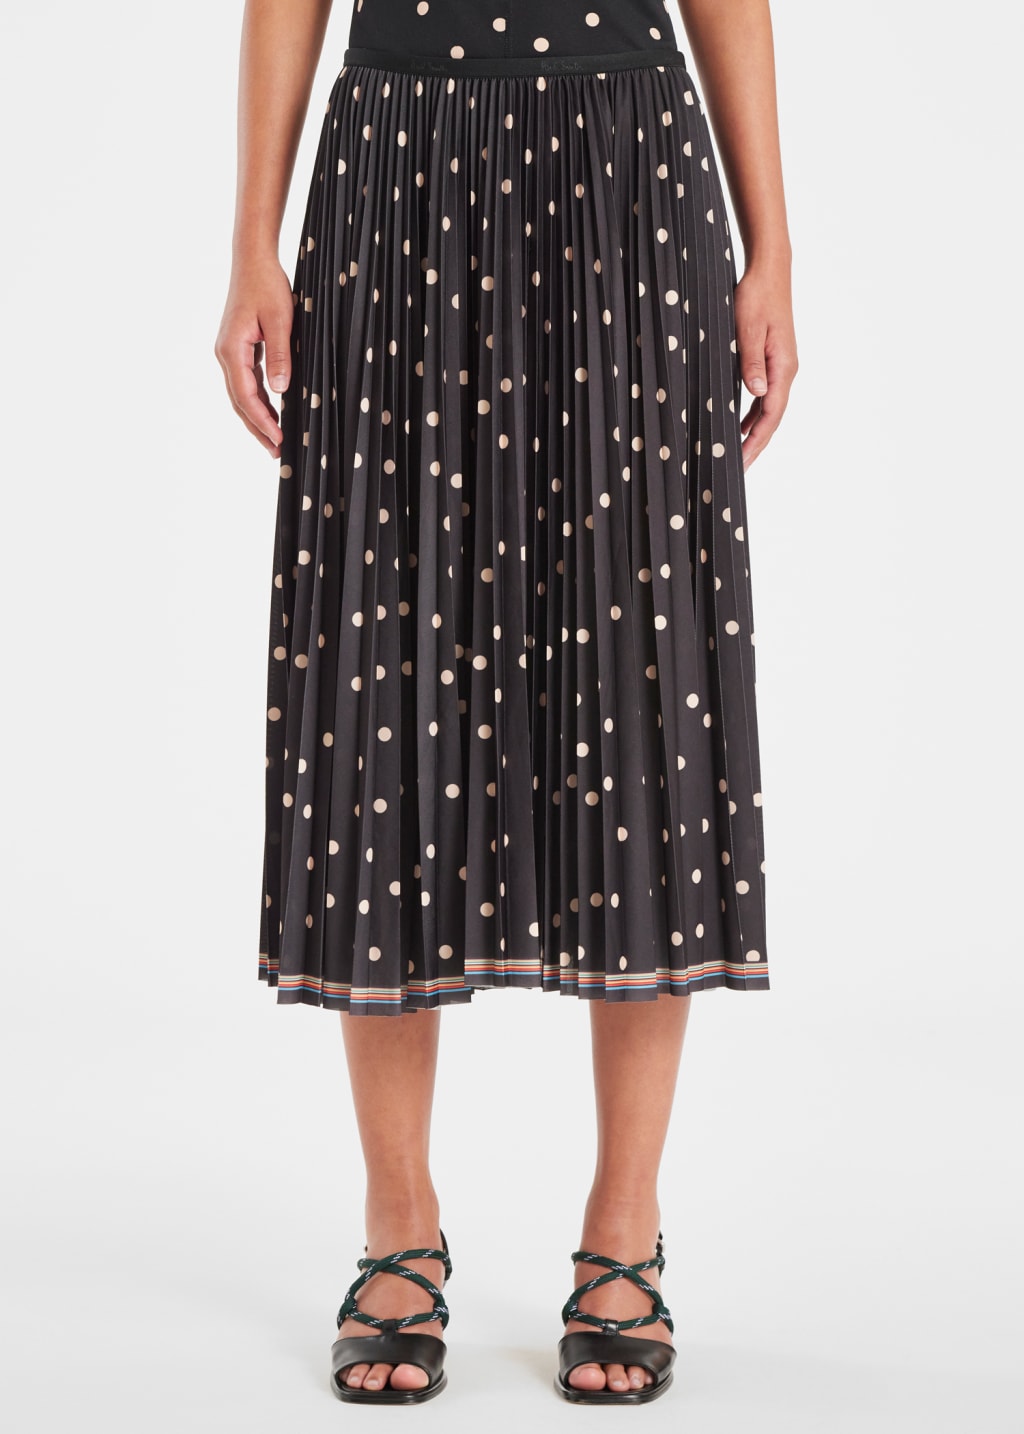 Model View - Women's Black Polka Dot Pleated Midi Skirt Paul Smith